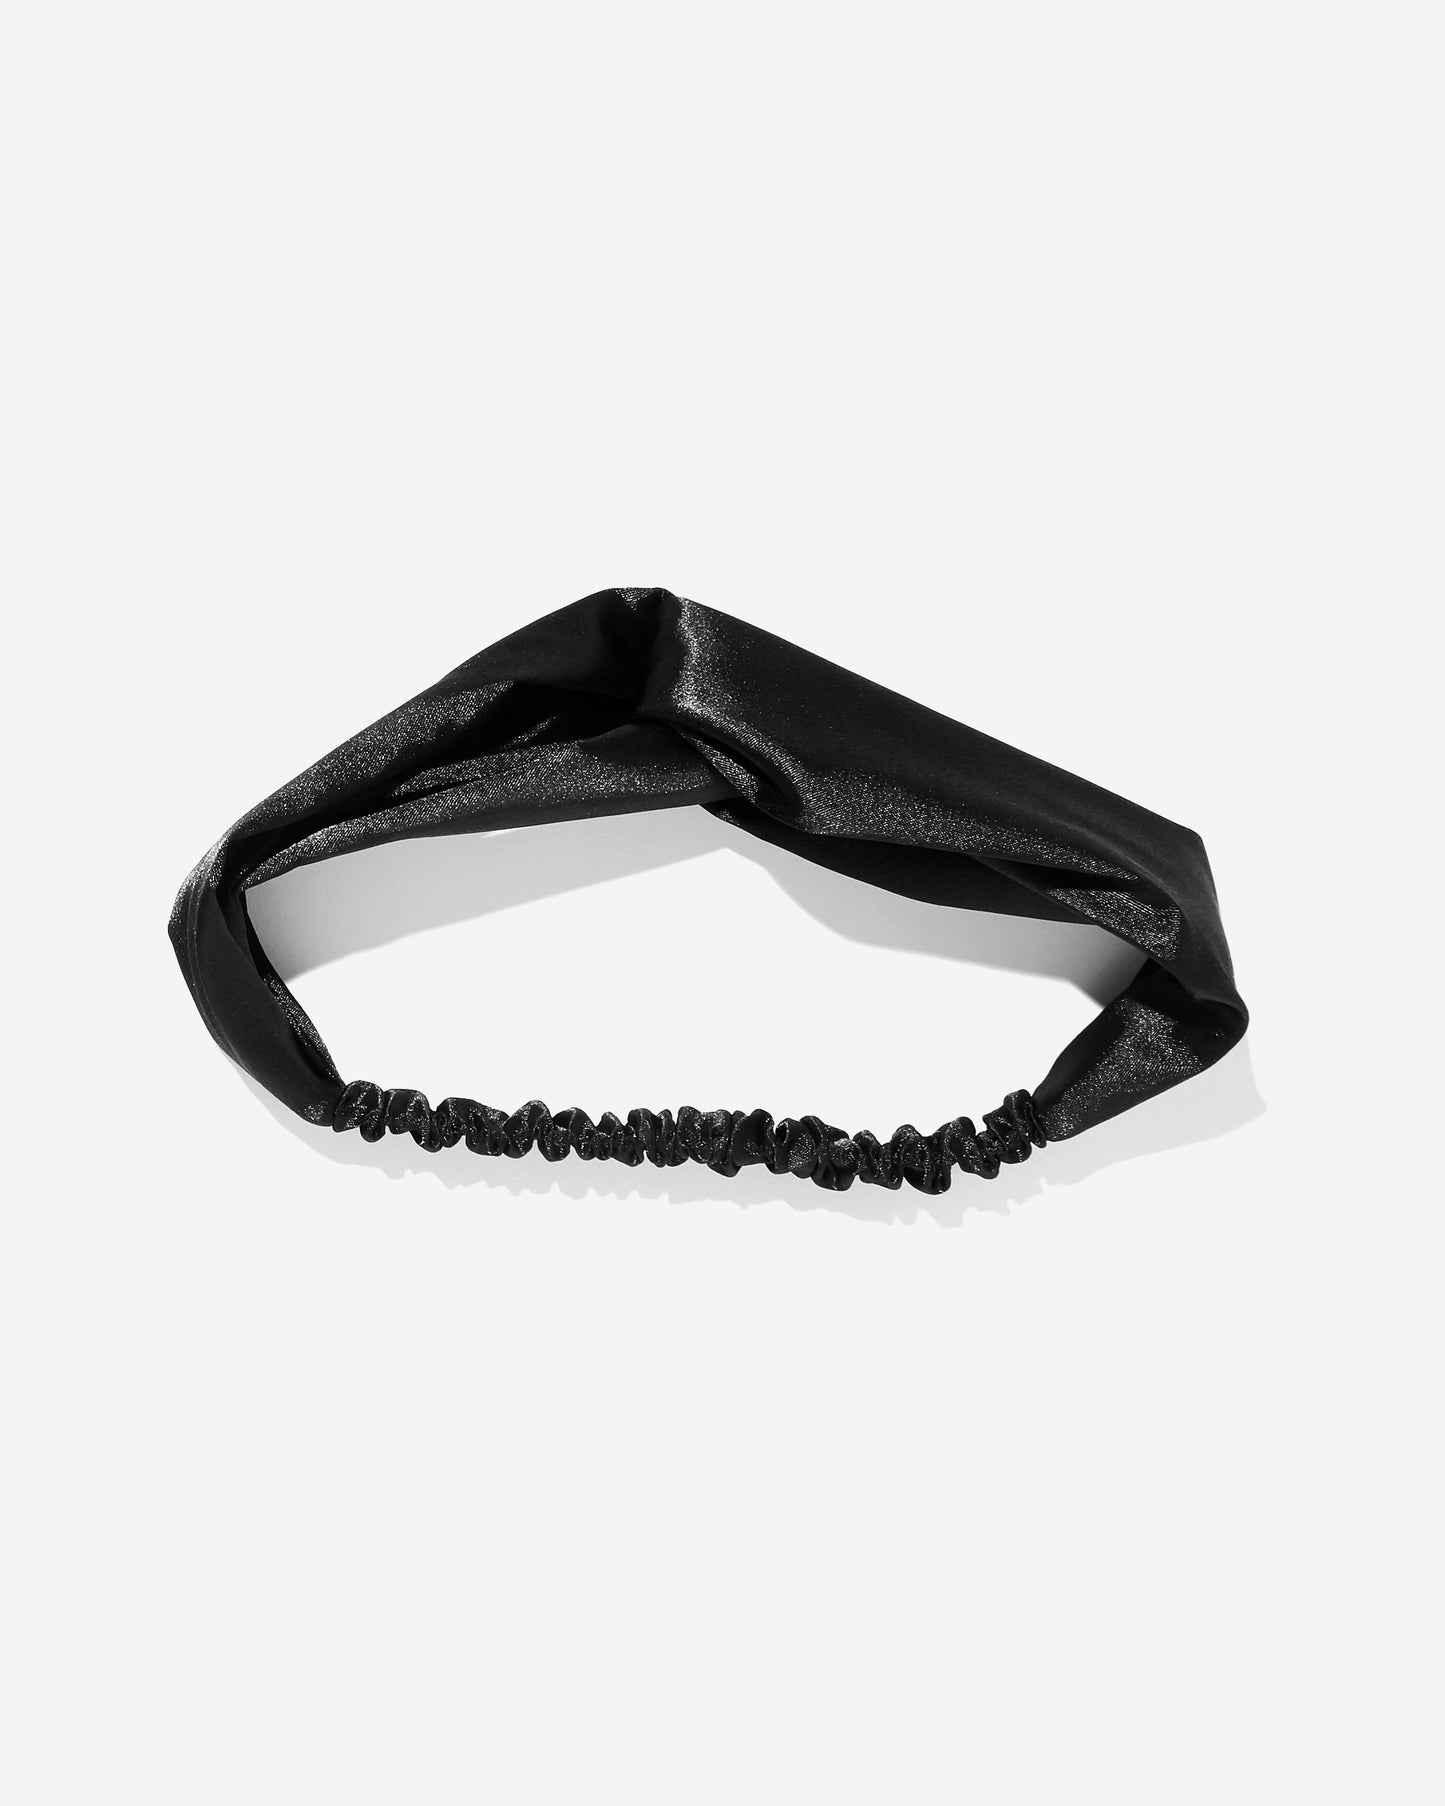 Lilly Lashes | Accessories | Black Satin Headband